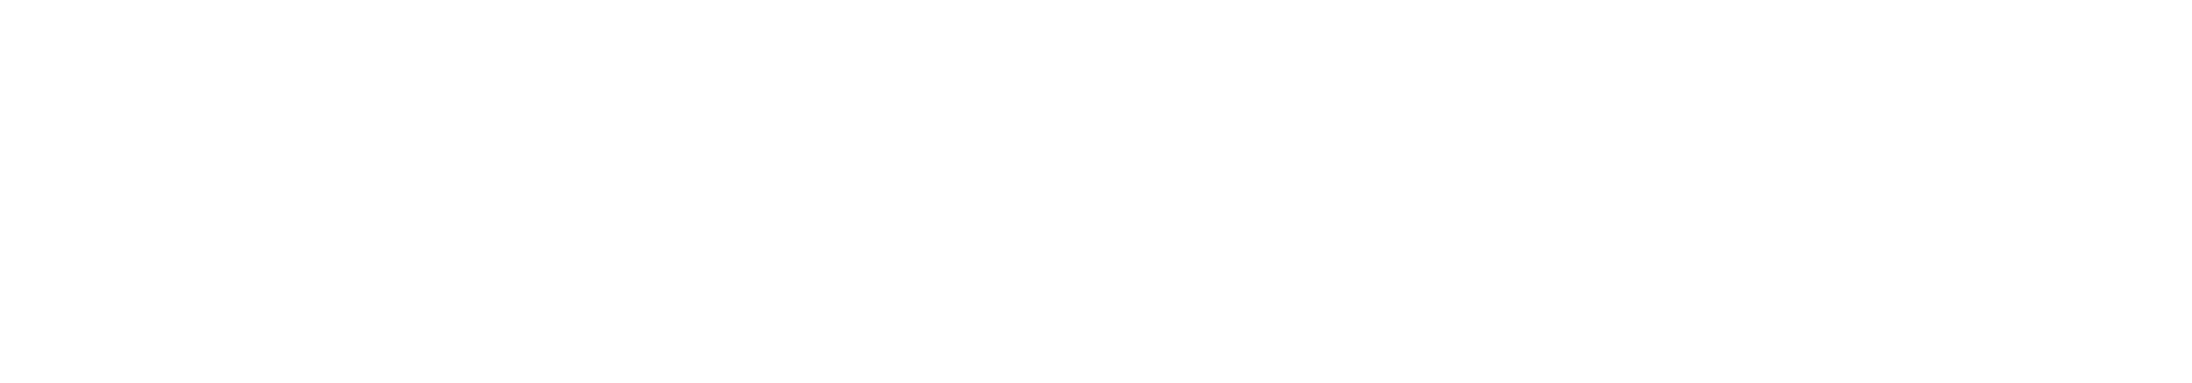 Coldwell Banker Brand Logo